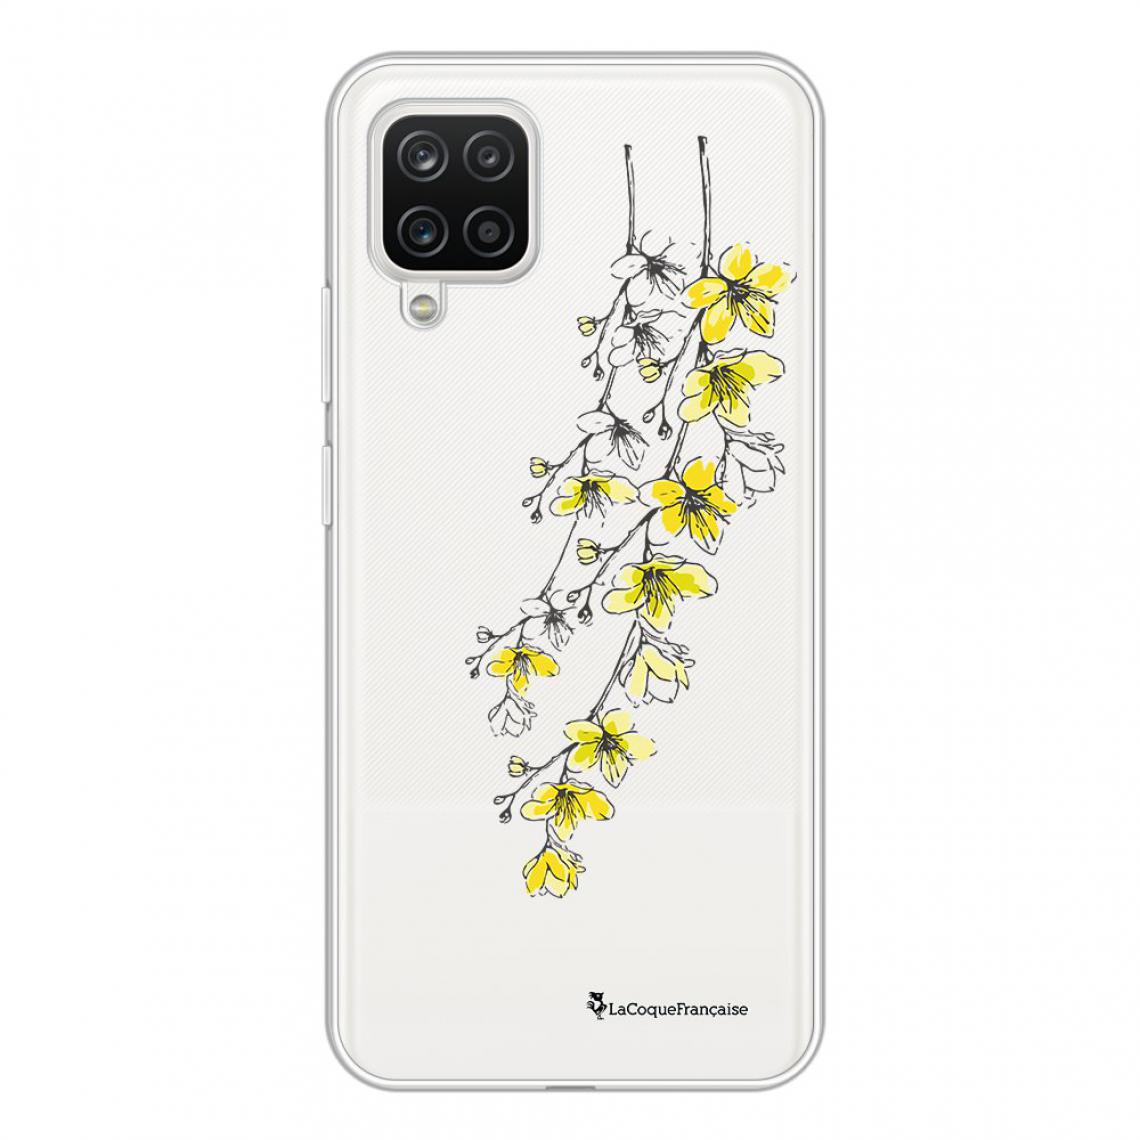 La Coque Francaise - Coque Samsung Galaxy A12 souple silicone transparente - Coque, étui smartphone